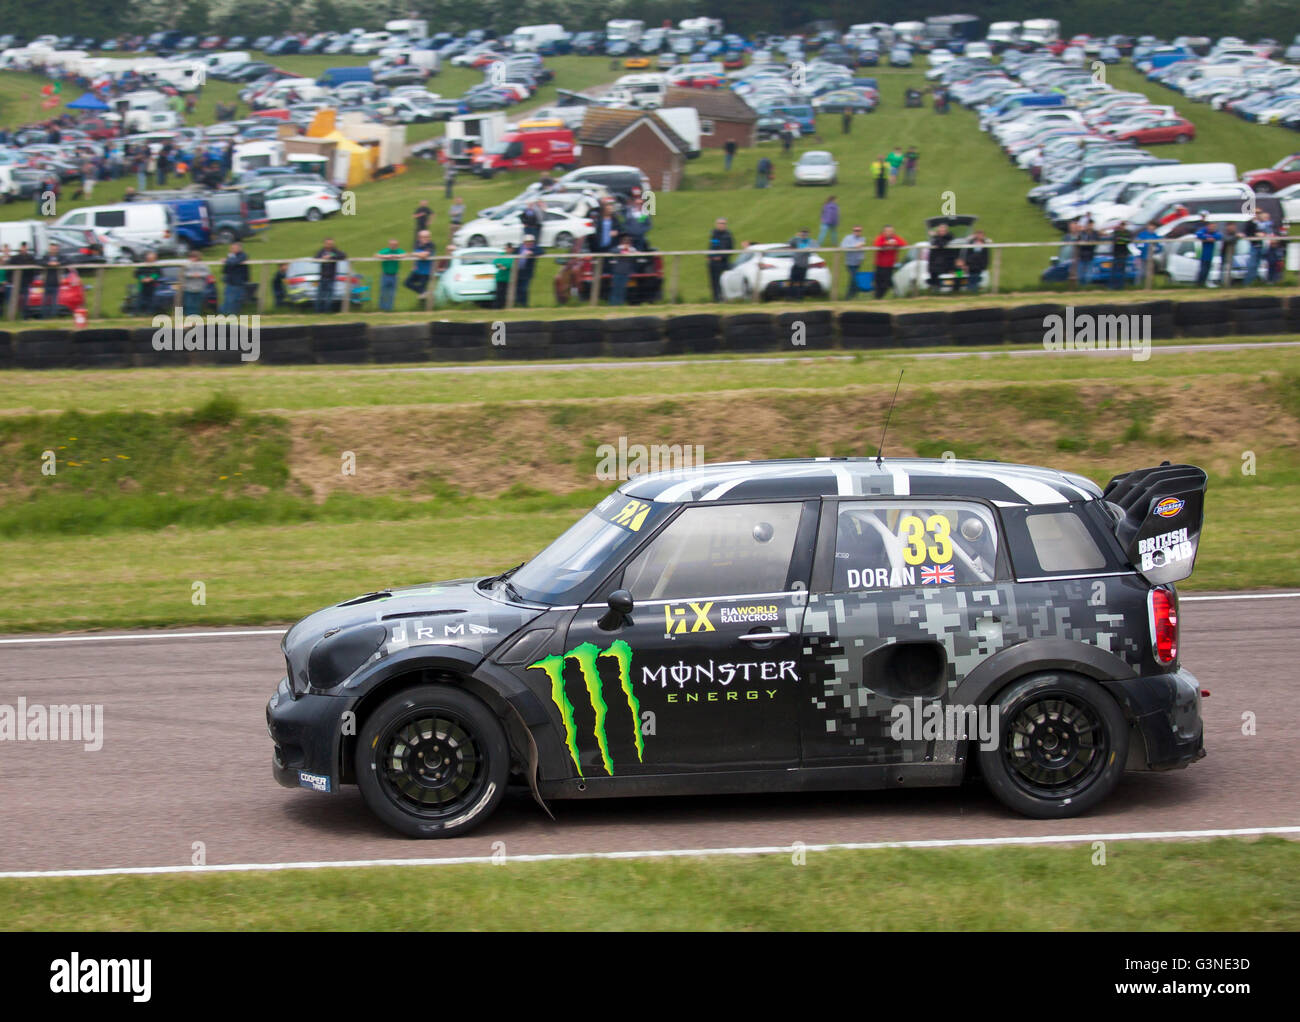 Mundo de carreras de rallycross, BMW Mini impulsada por Liam Doran. Foto de stock